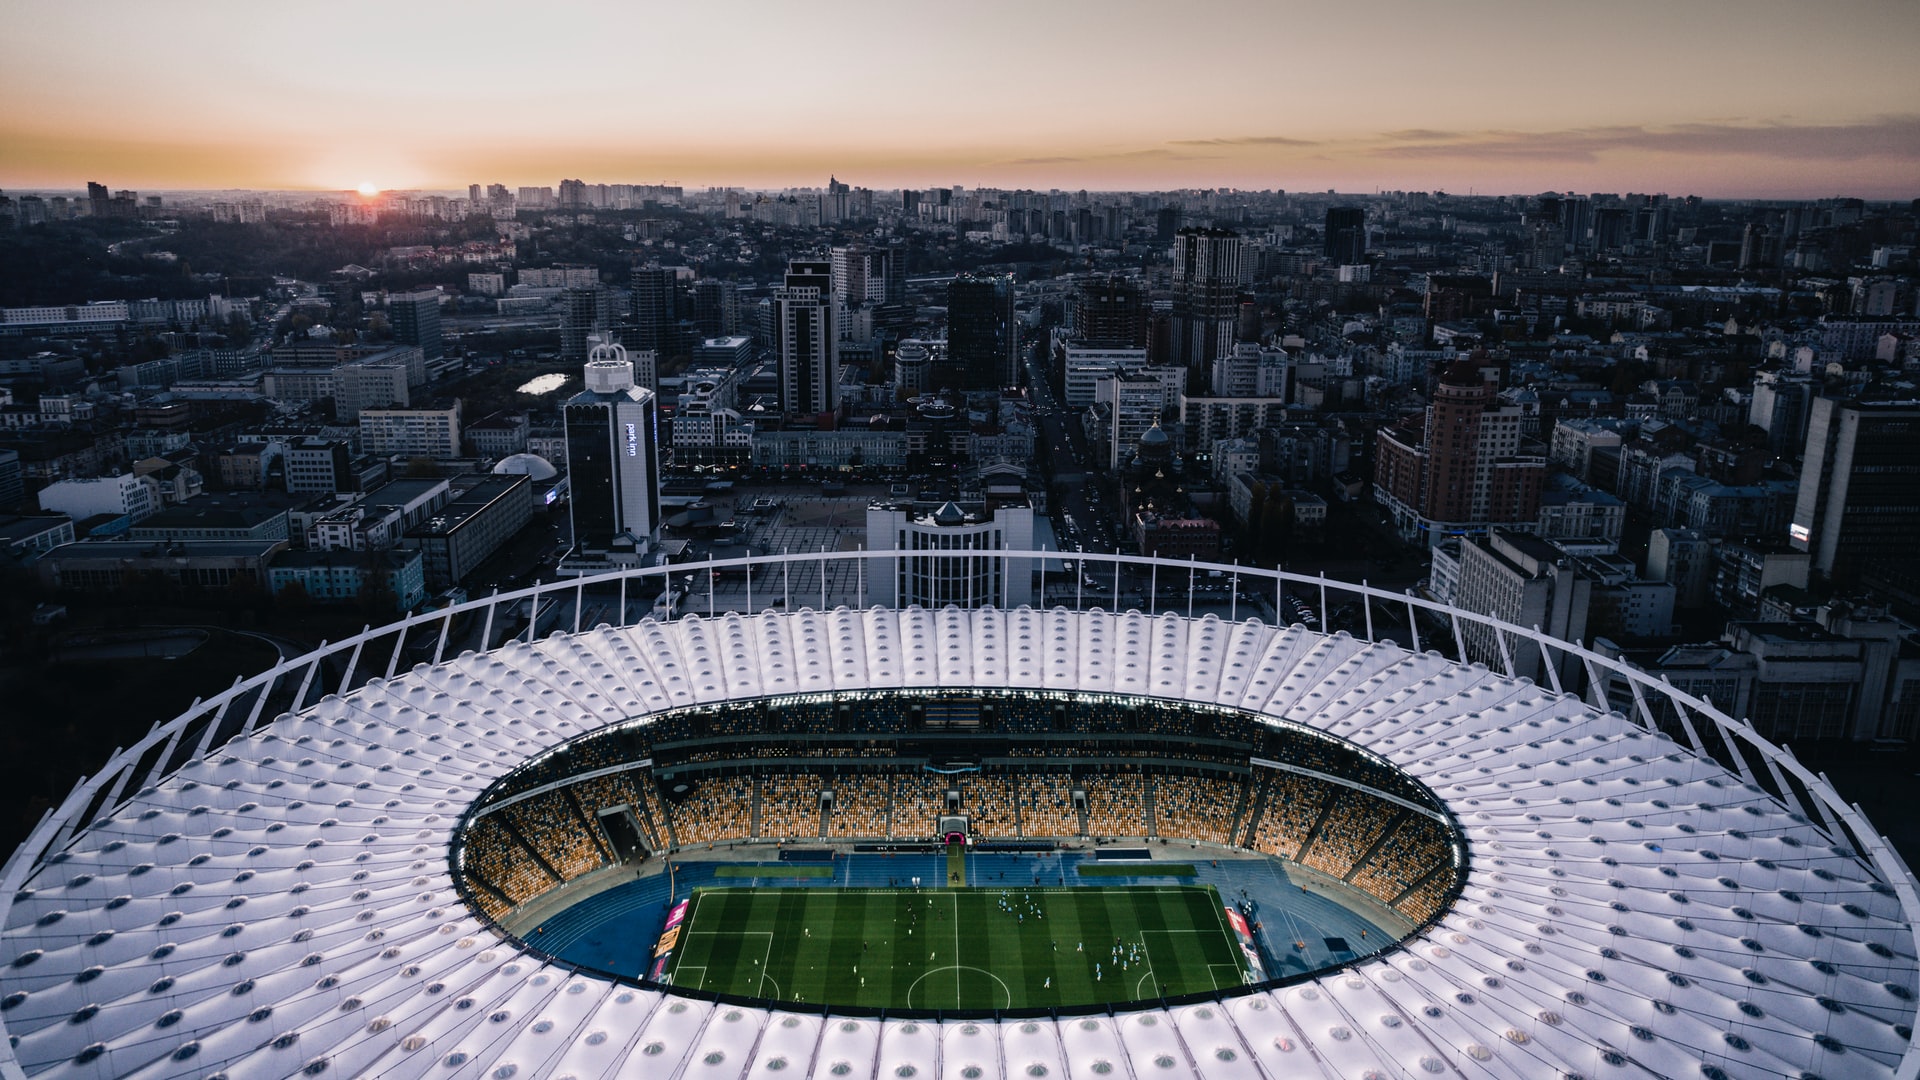 National Sports Complex Olimpiyskiy, the largest football stadium in Ukraine